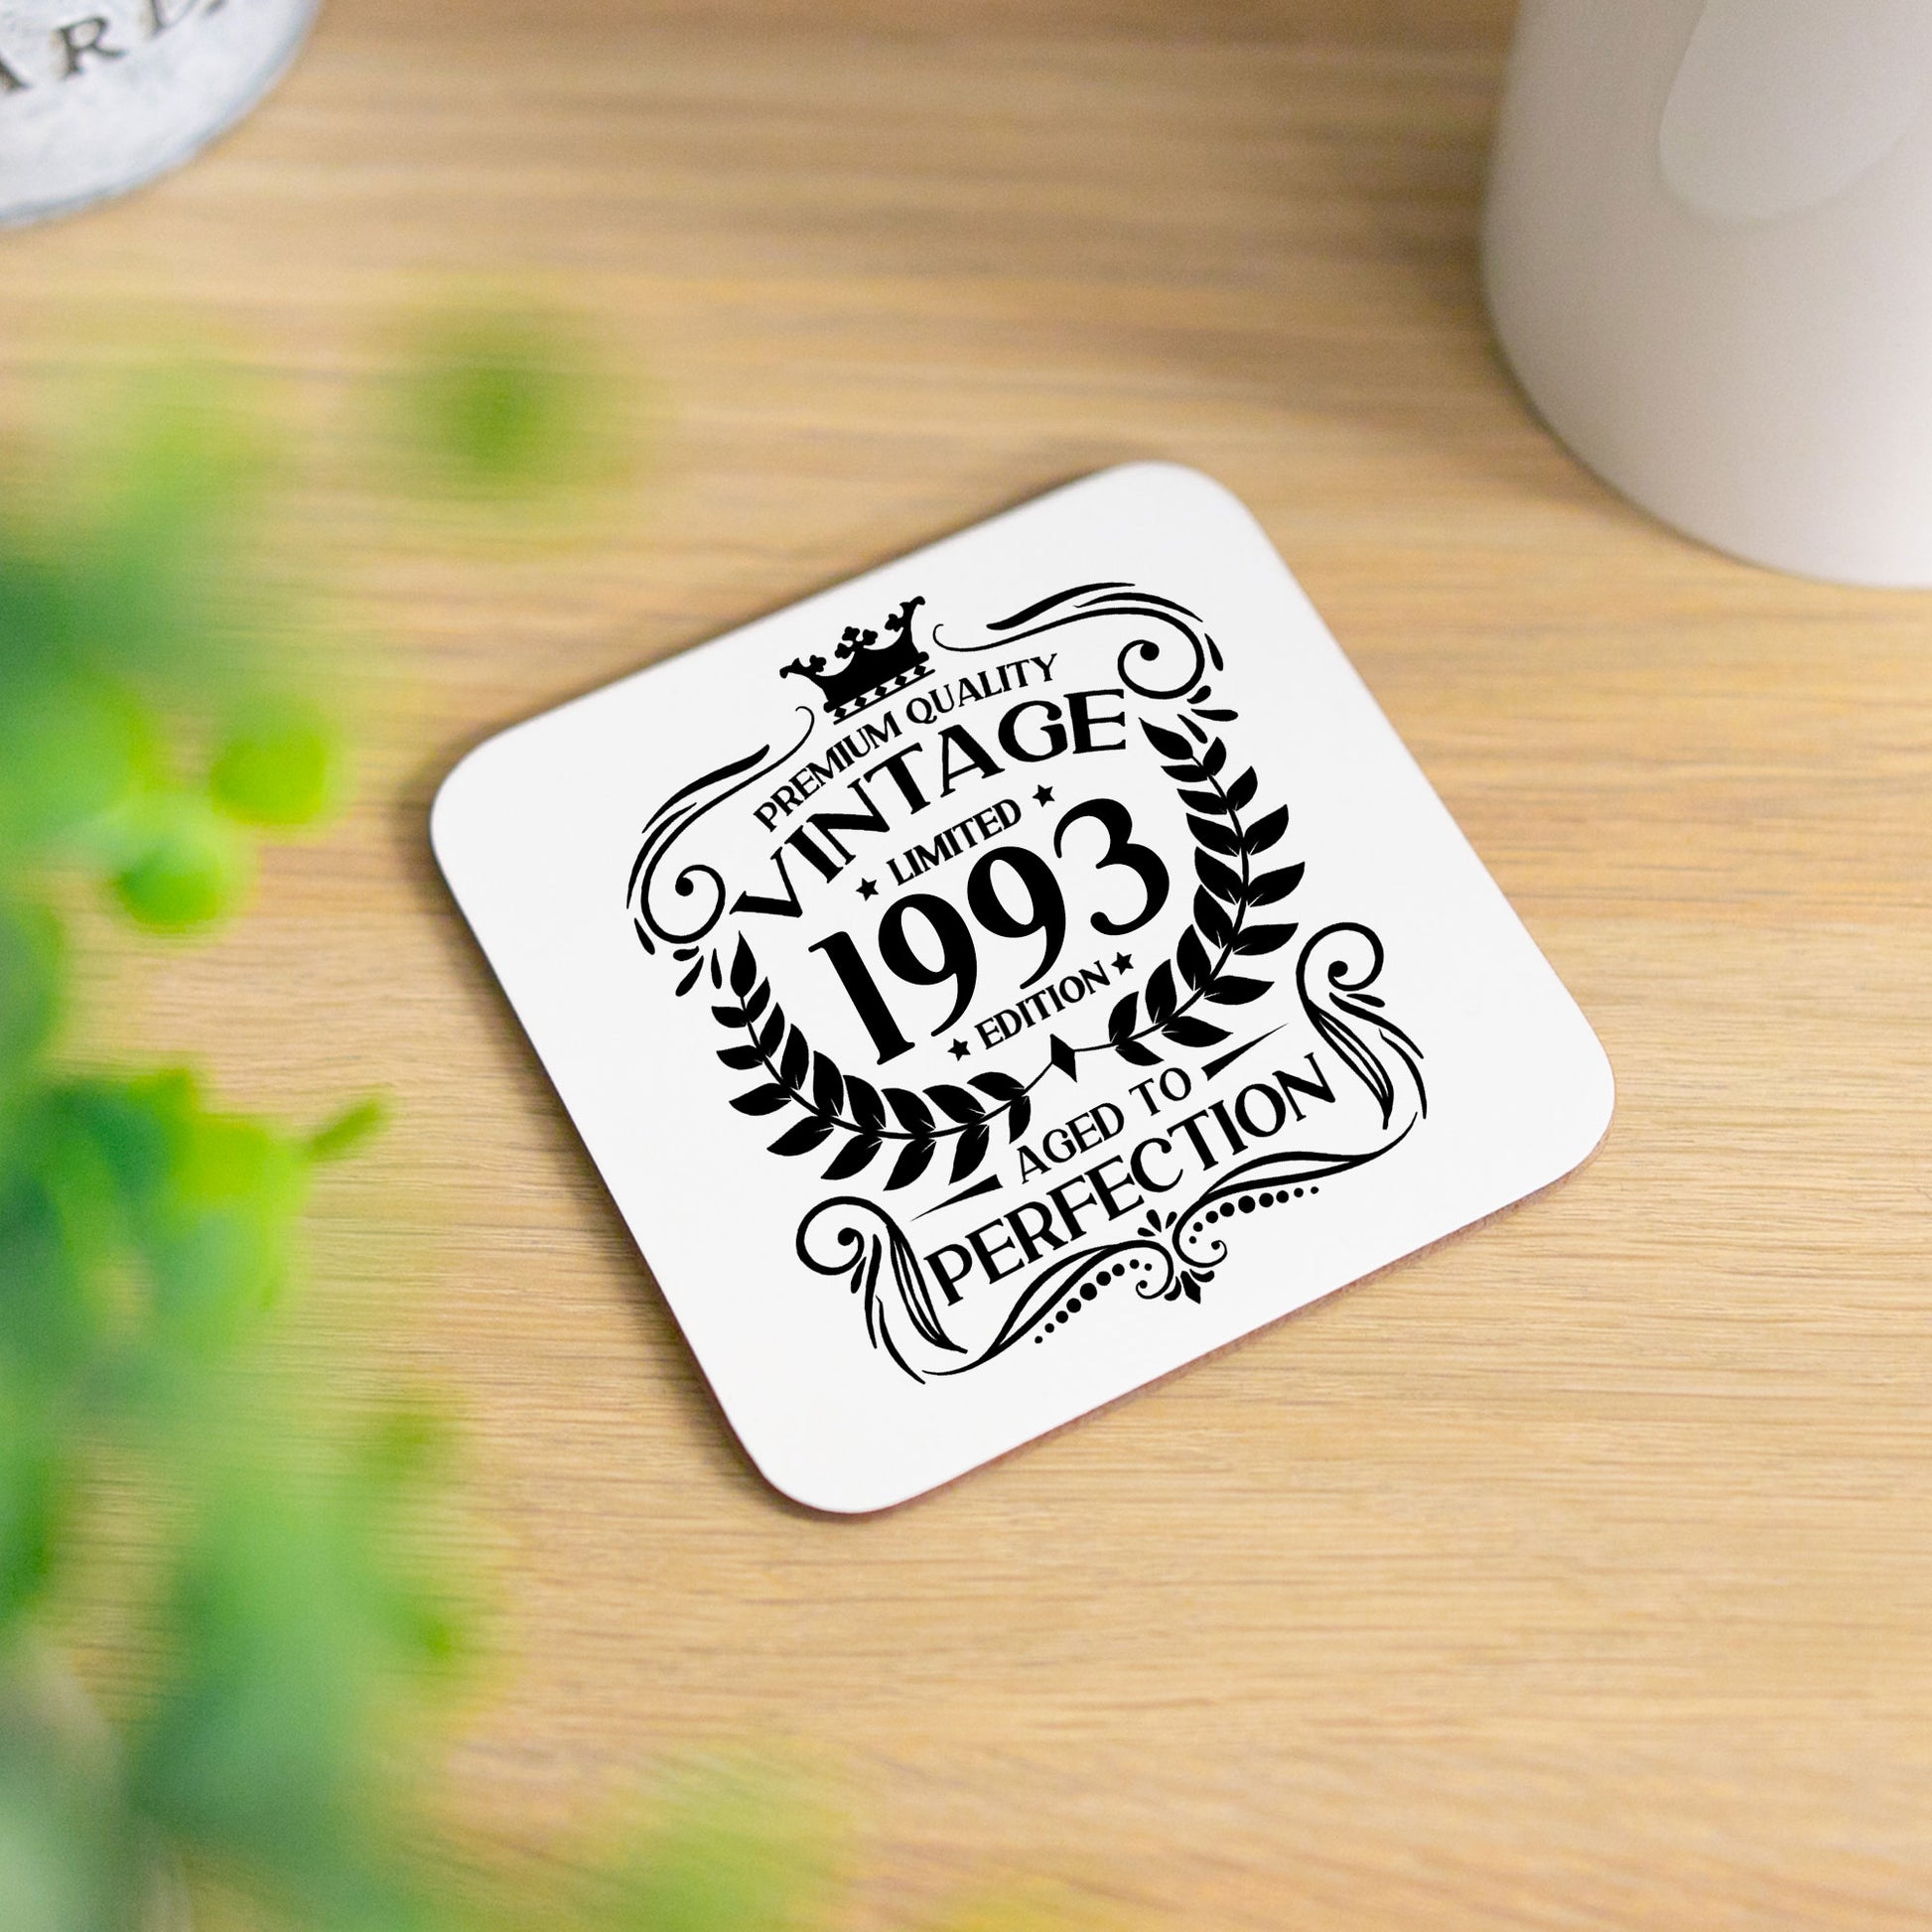 Vintage 1993 30th Birthday Engraved Beer Pint Glass Gift  - Always Looking Good - Glass & Printed Coaster  